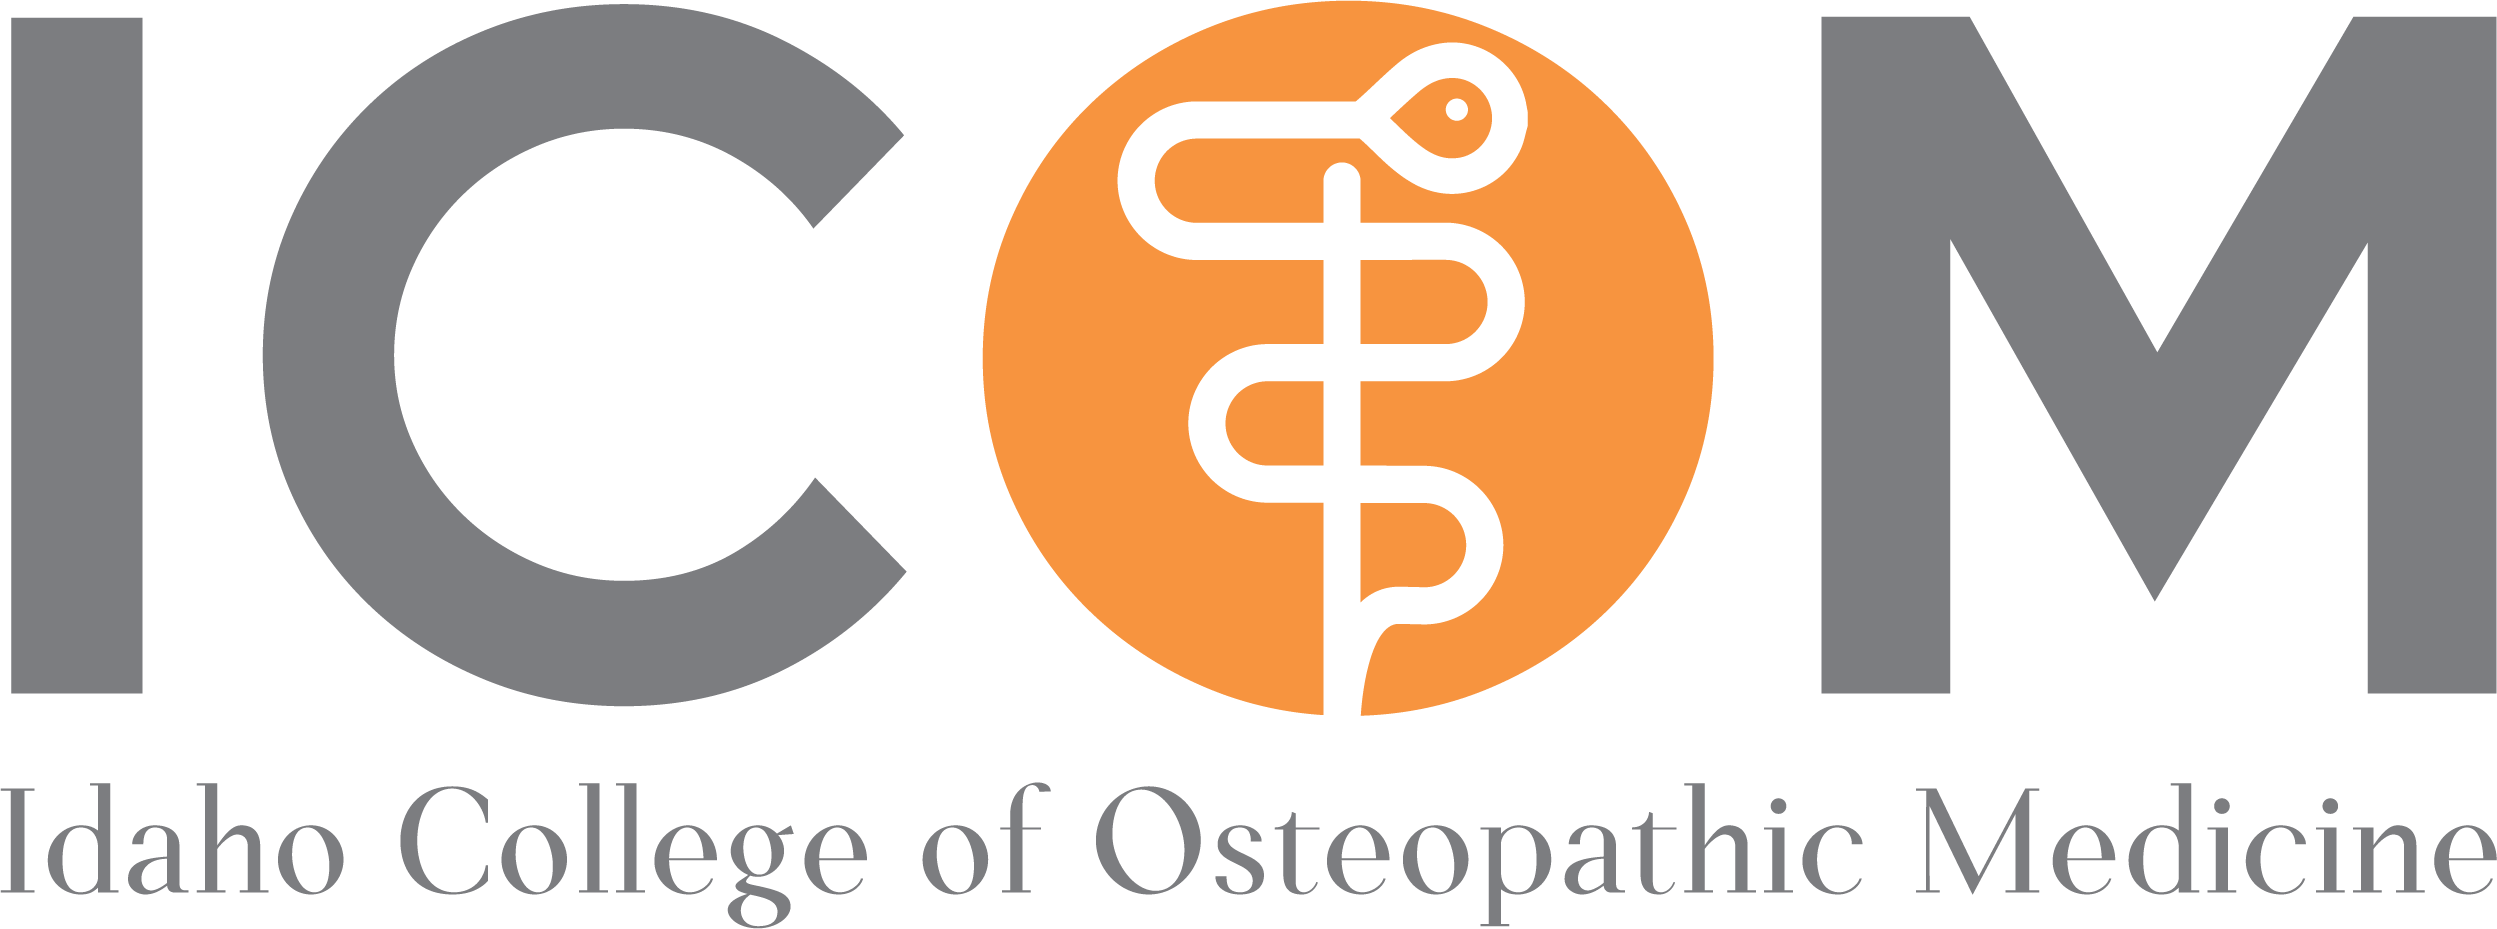 Idaho College of Osteopathic Medicine Logo.